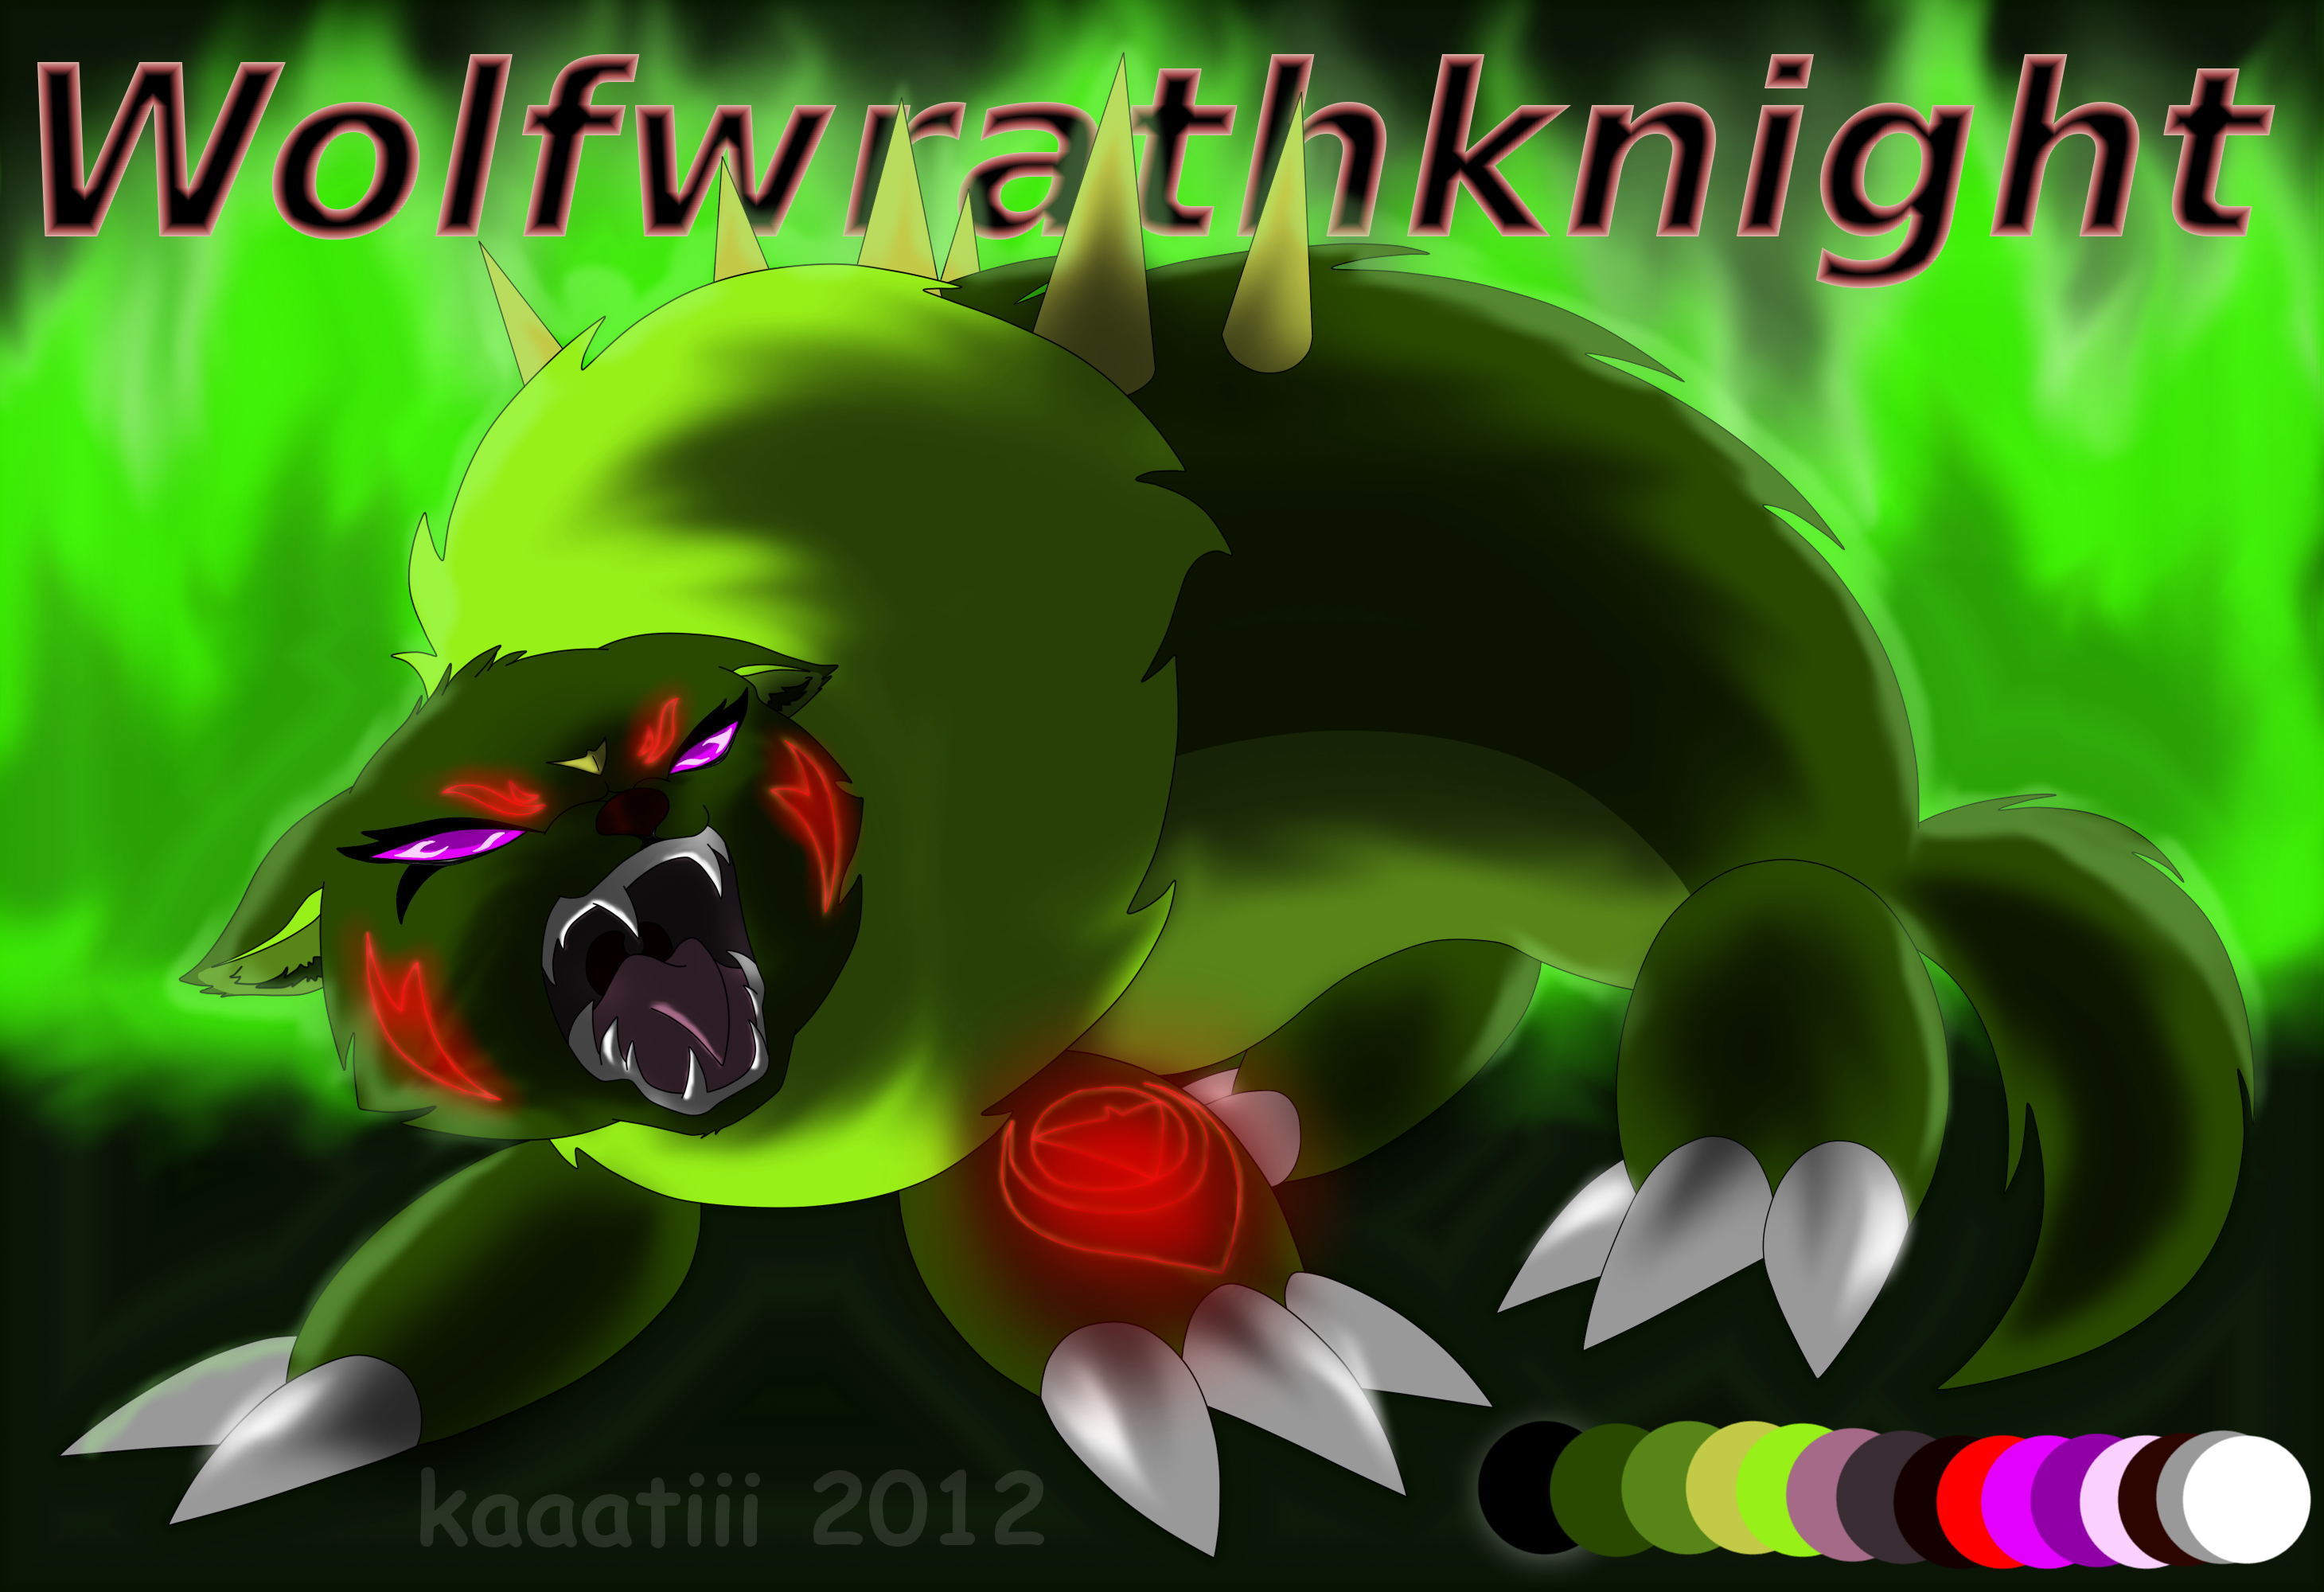 Wolfwrath-Knight als Wolfwrath